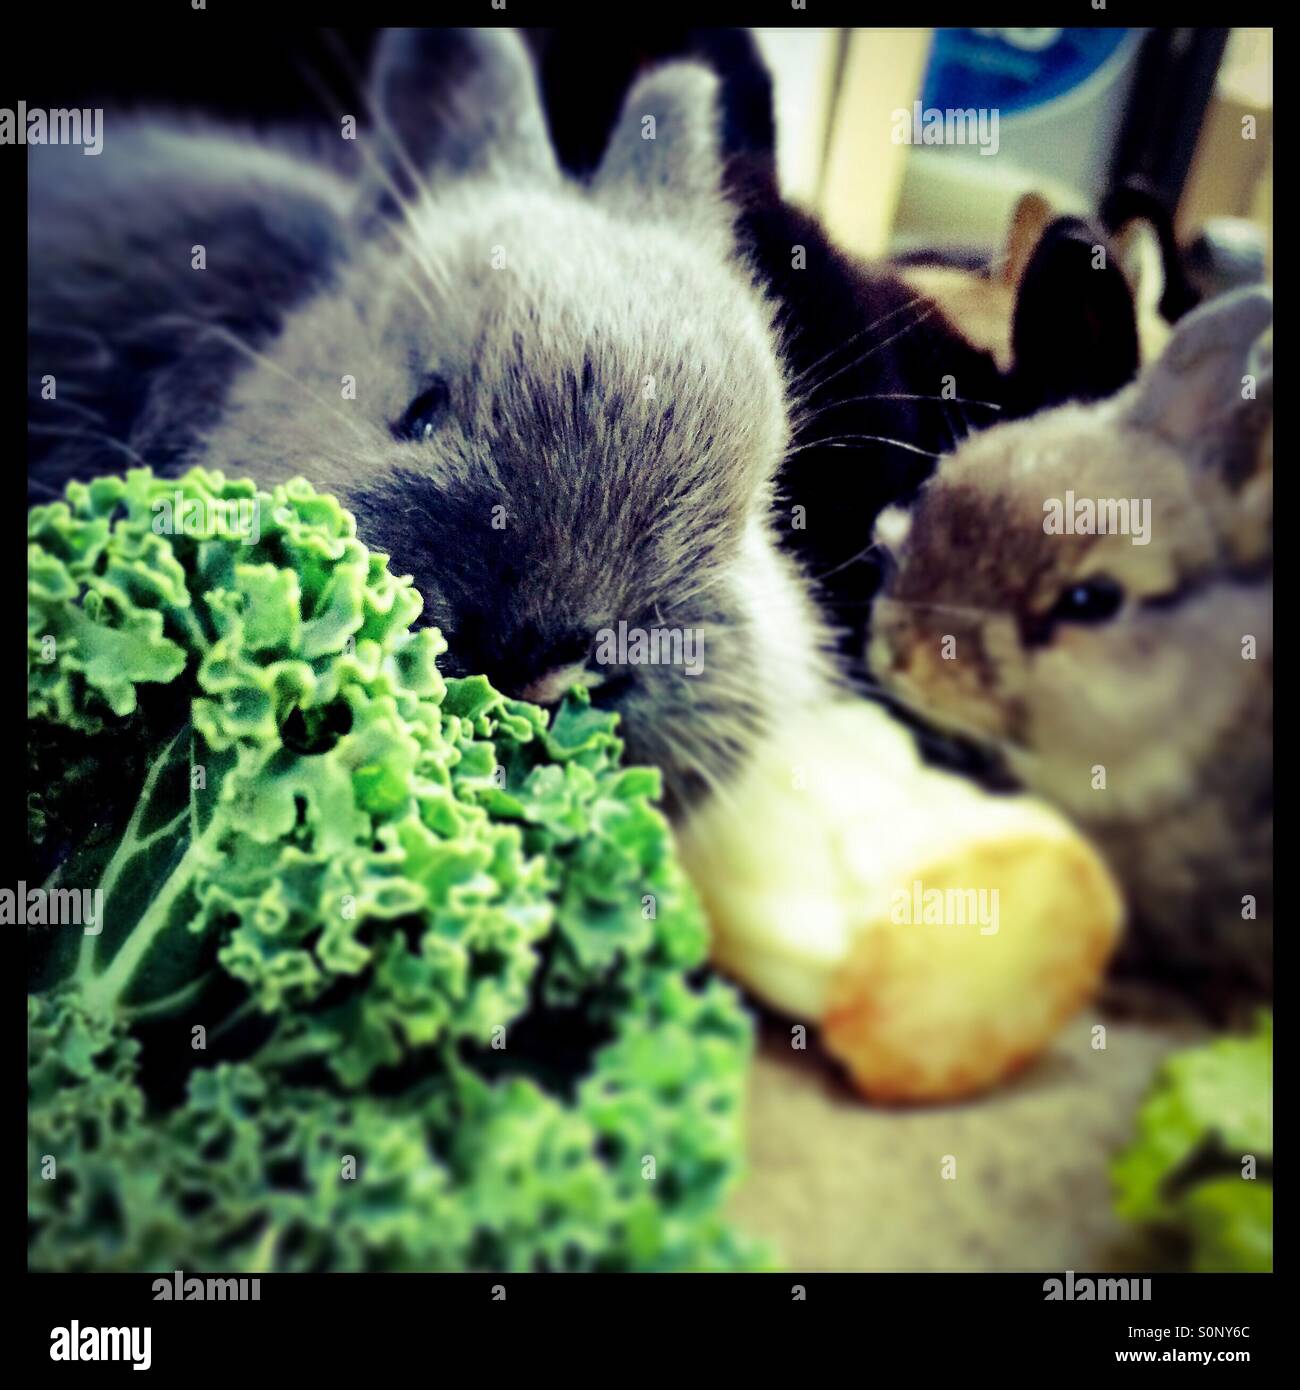 Baby rabbits eating kale. Stock Photo